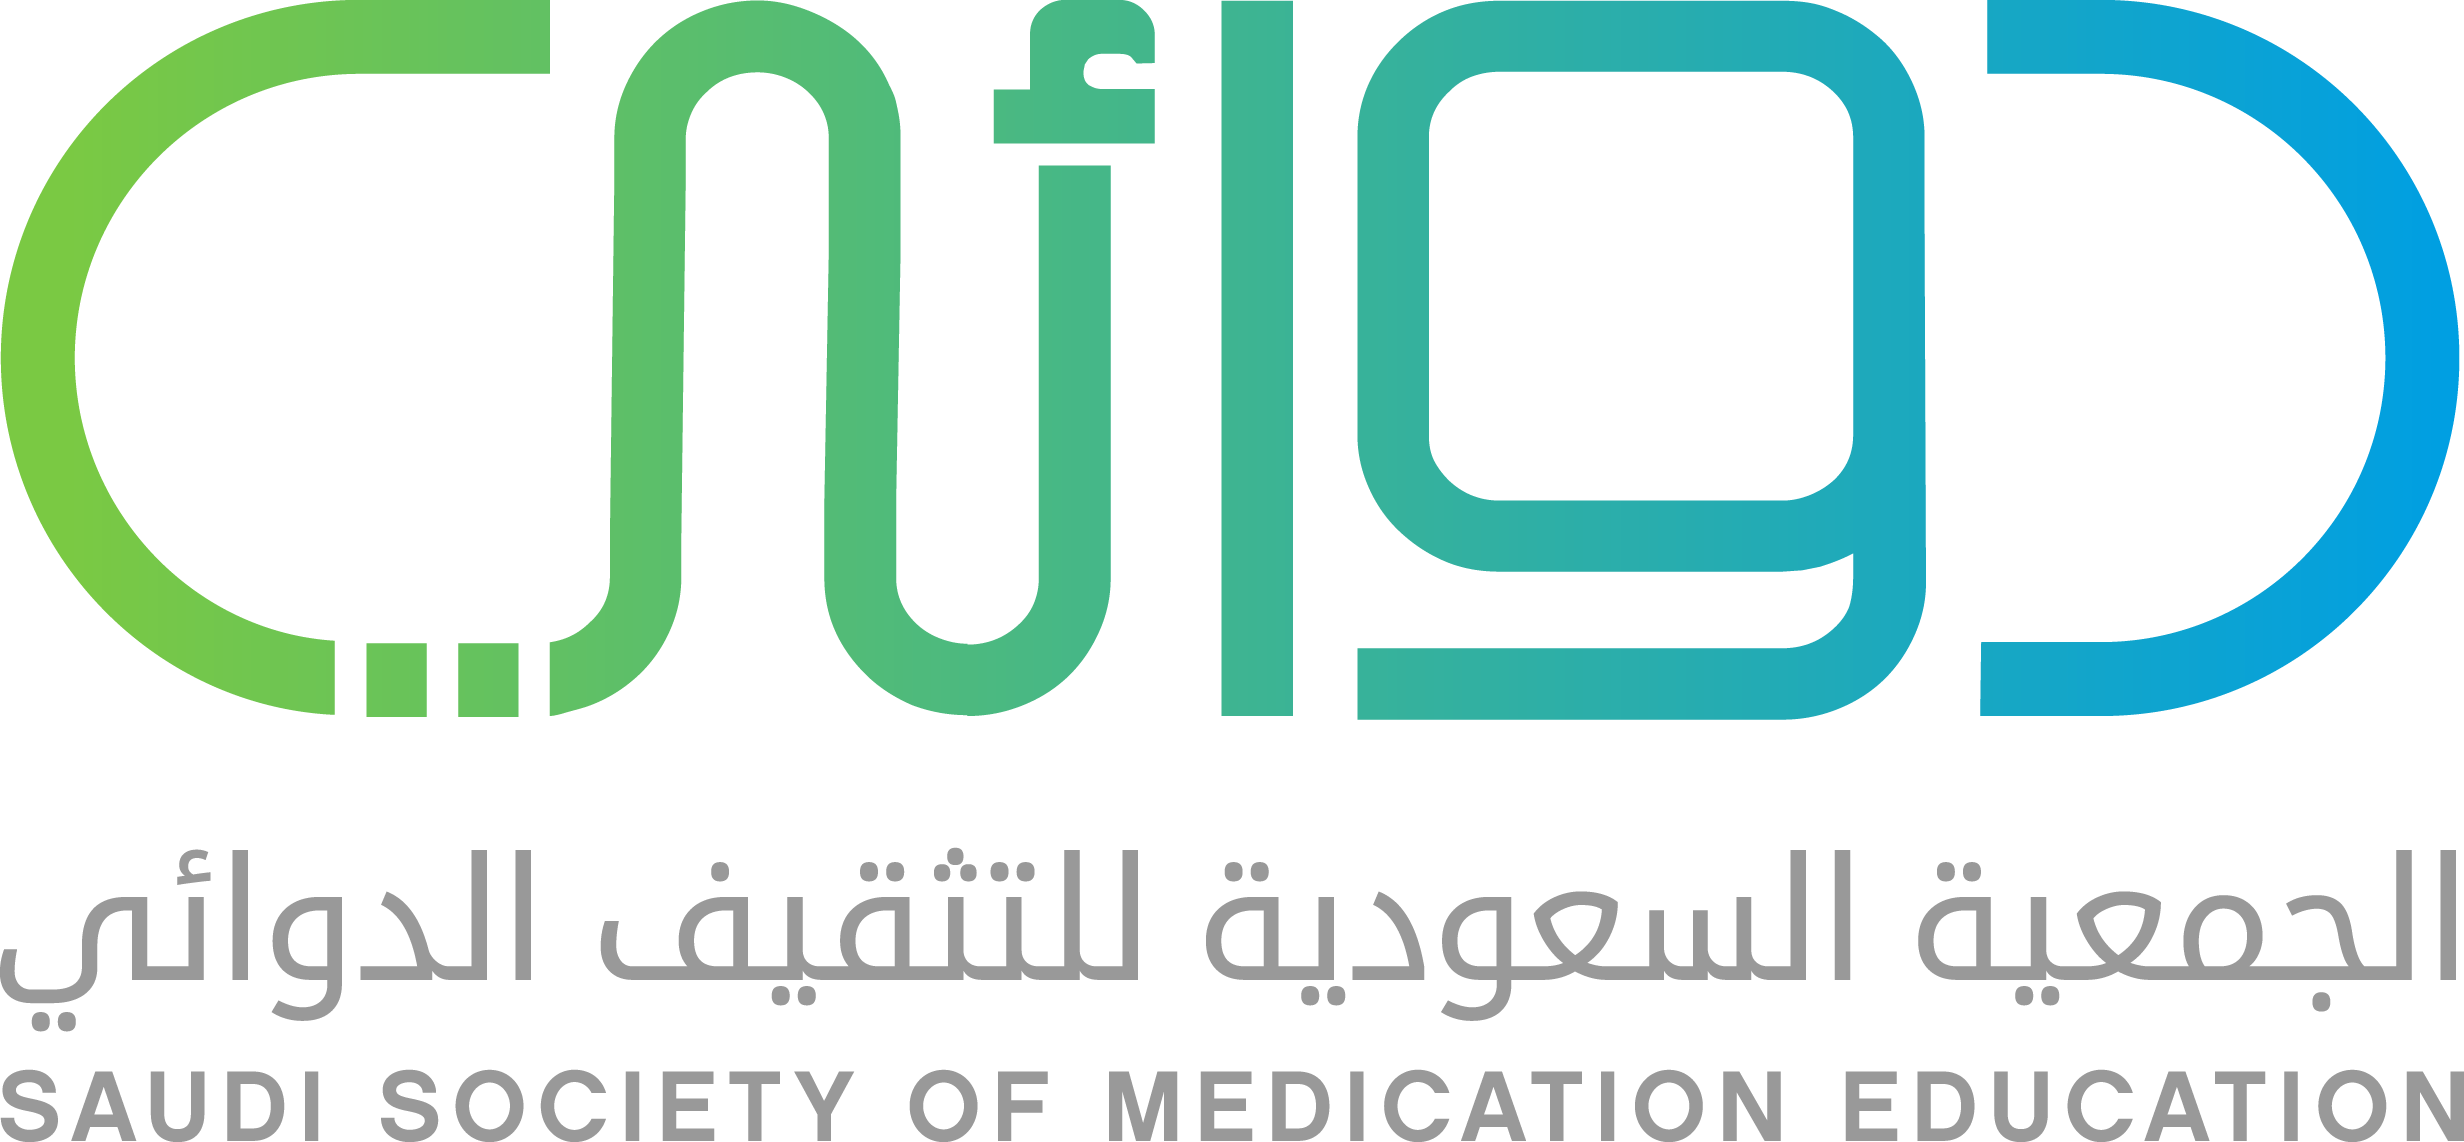 Saudi society of medication education 